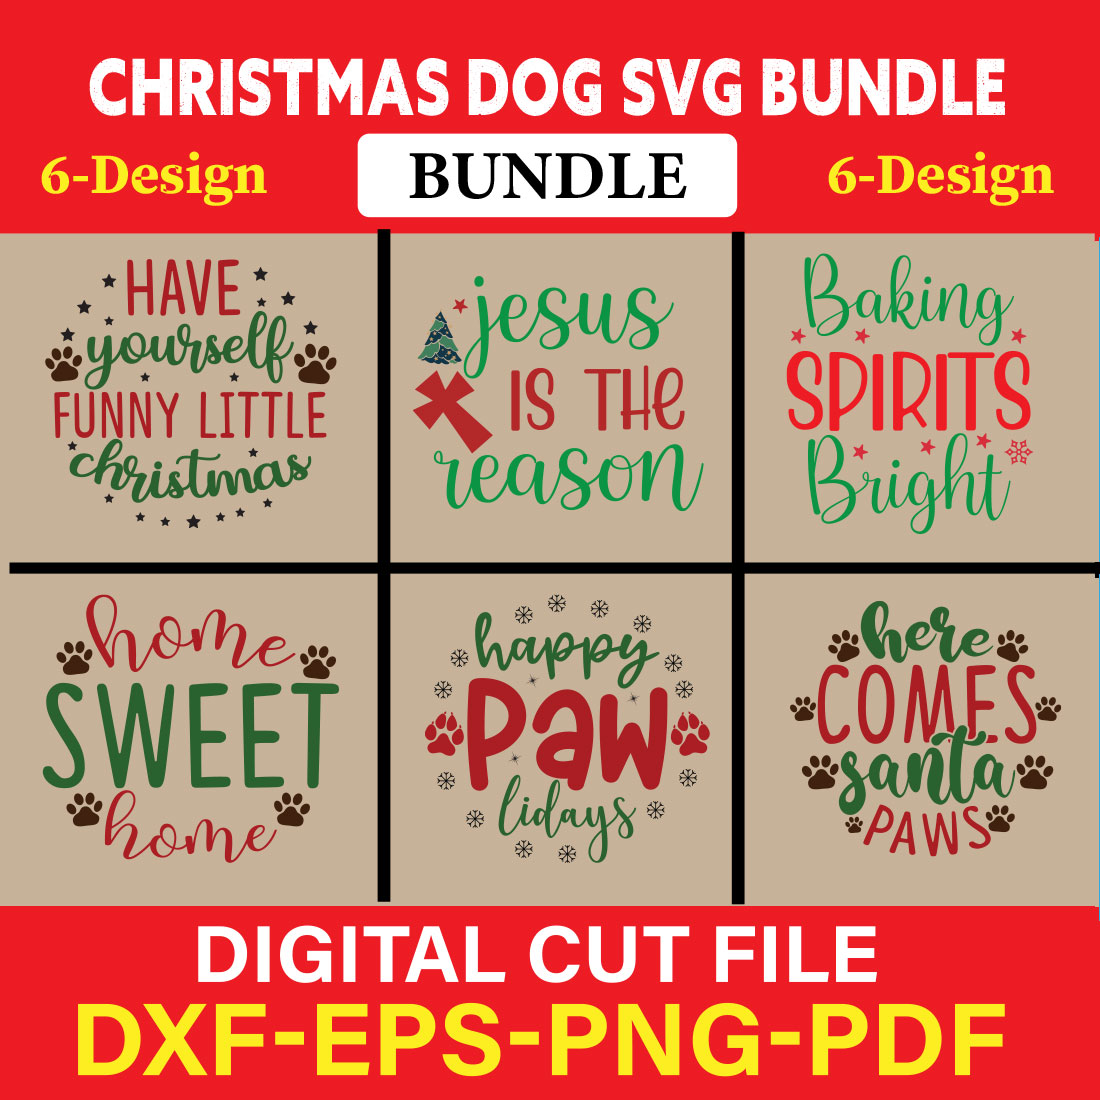 Christmas SVG Bundle / Funny Christmas SVG / Cut File vol-31 cover image.